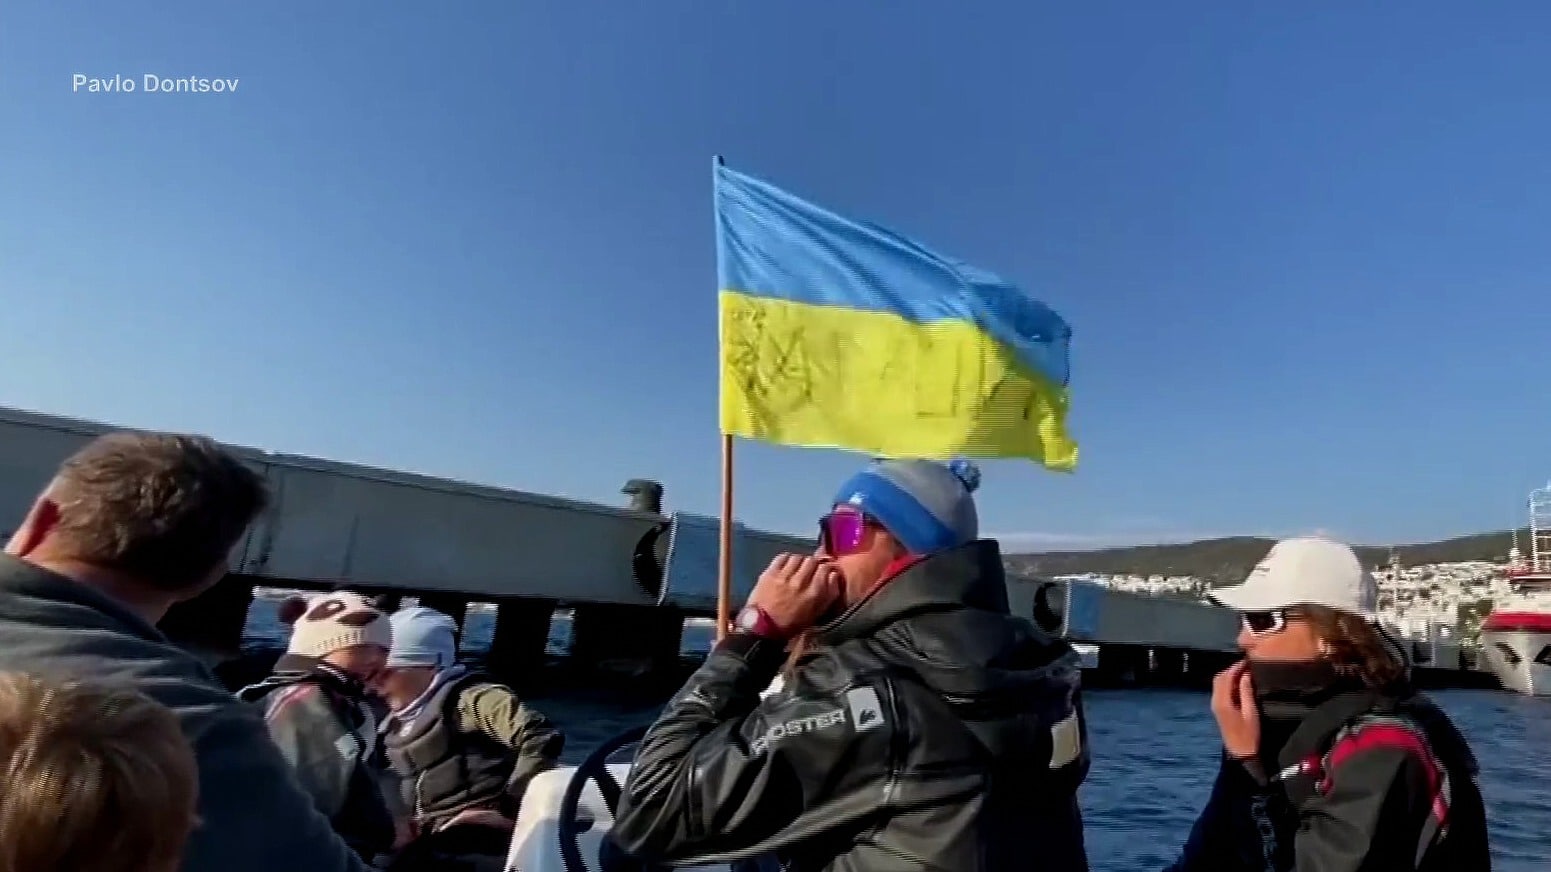 ucranianos protestan en turquia frente a yate de roman abramovich